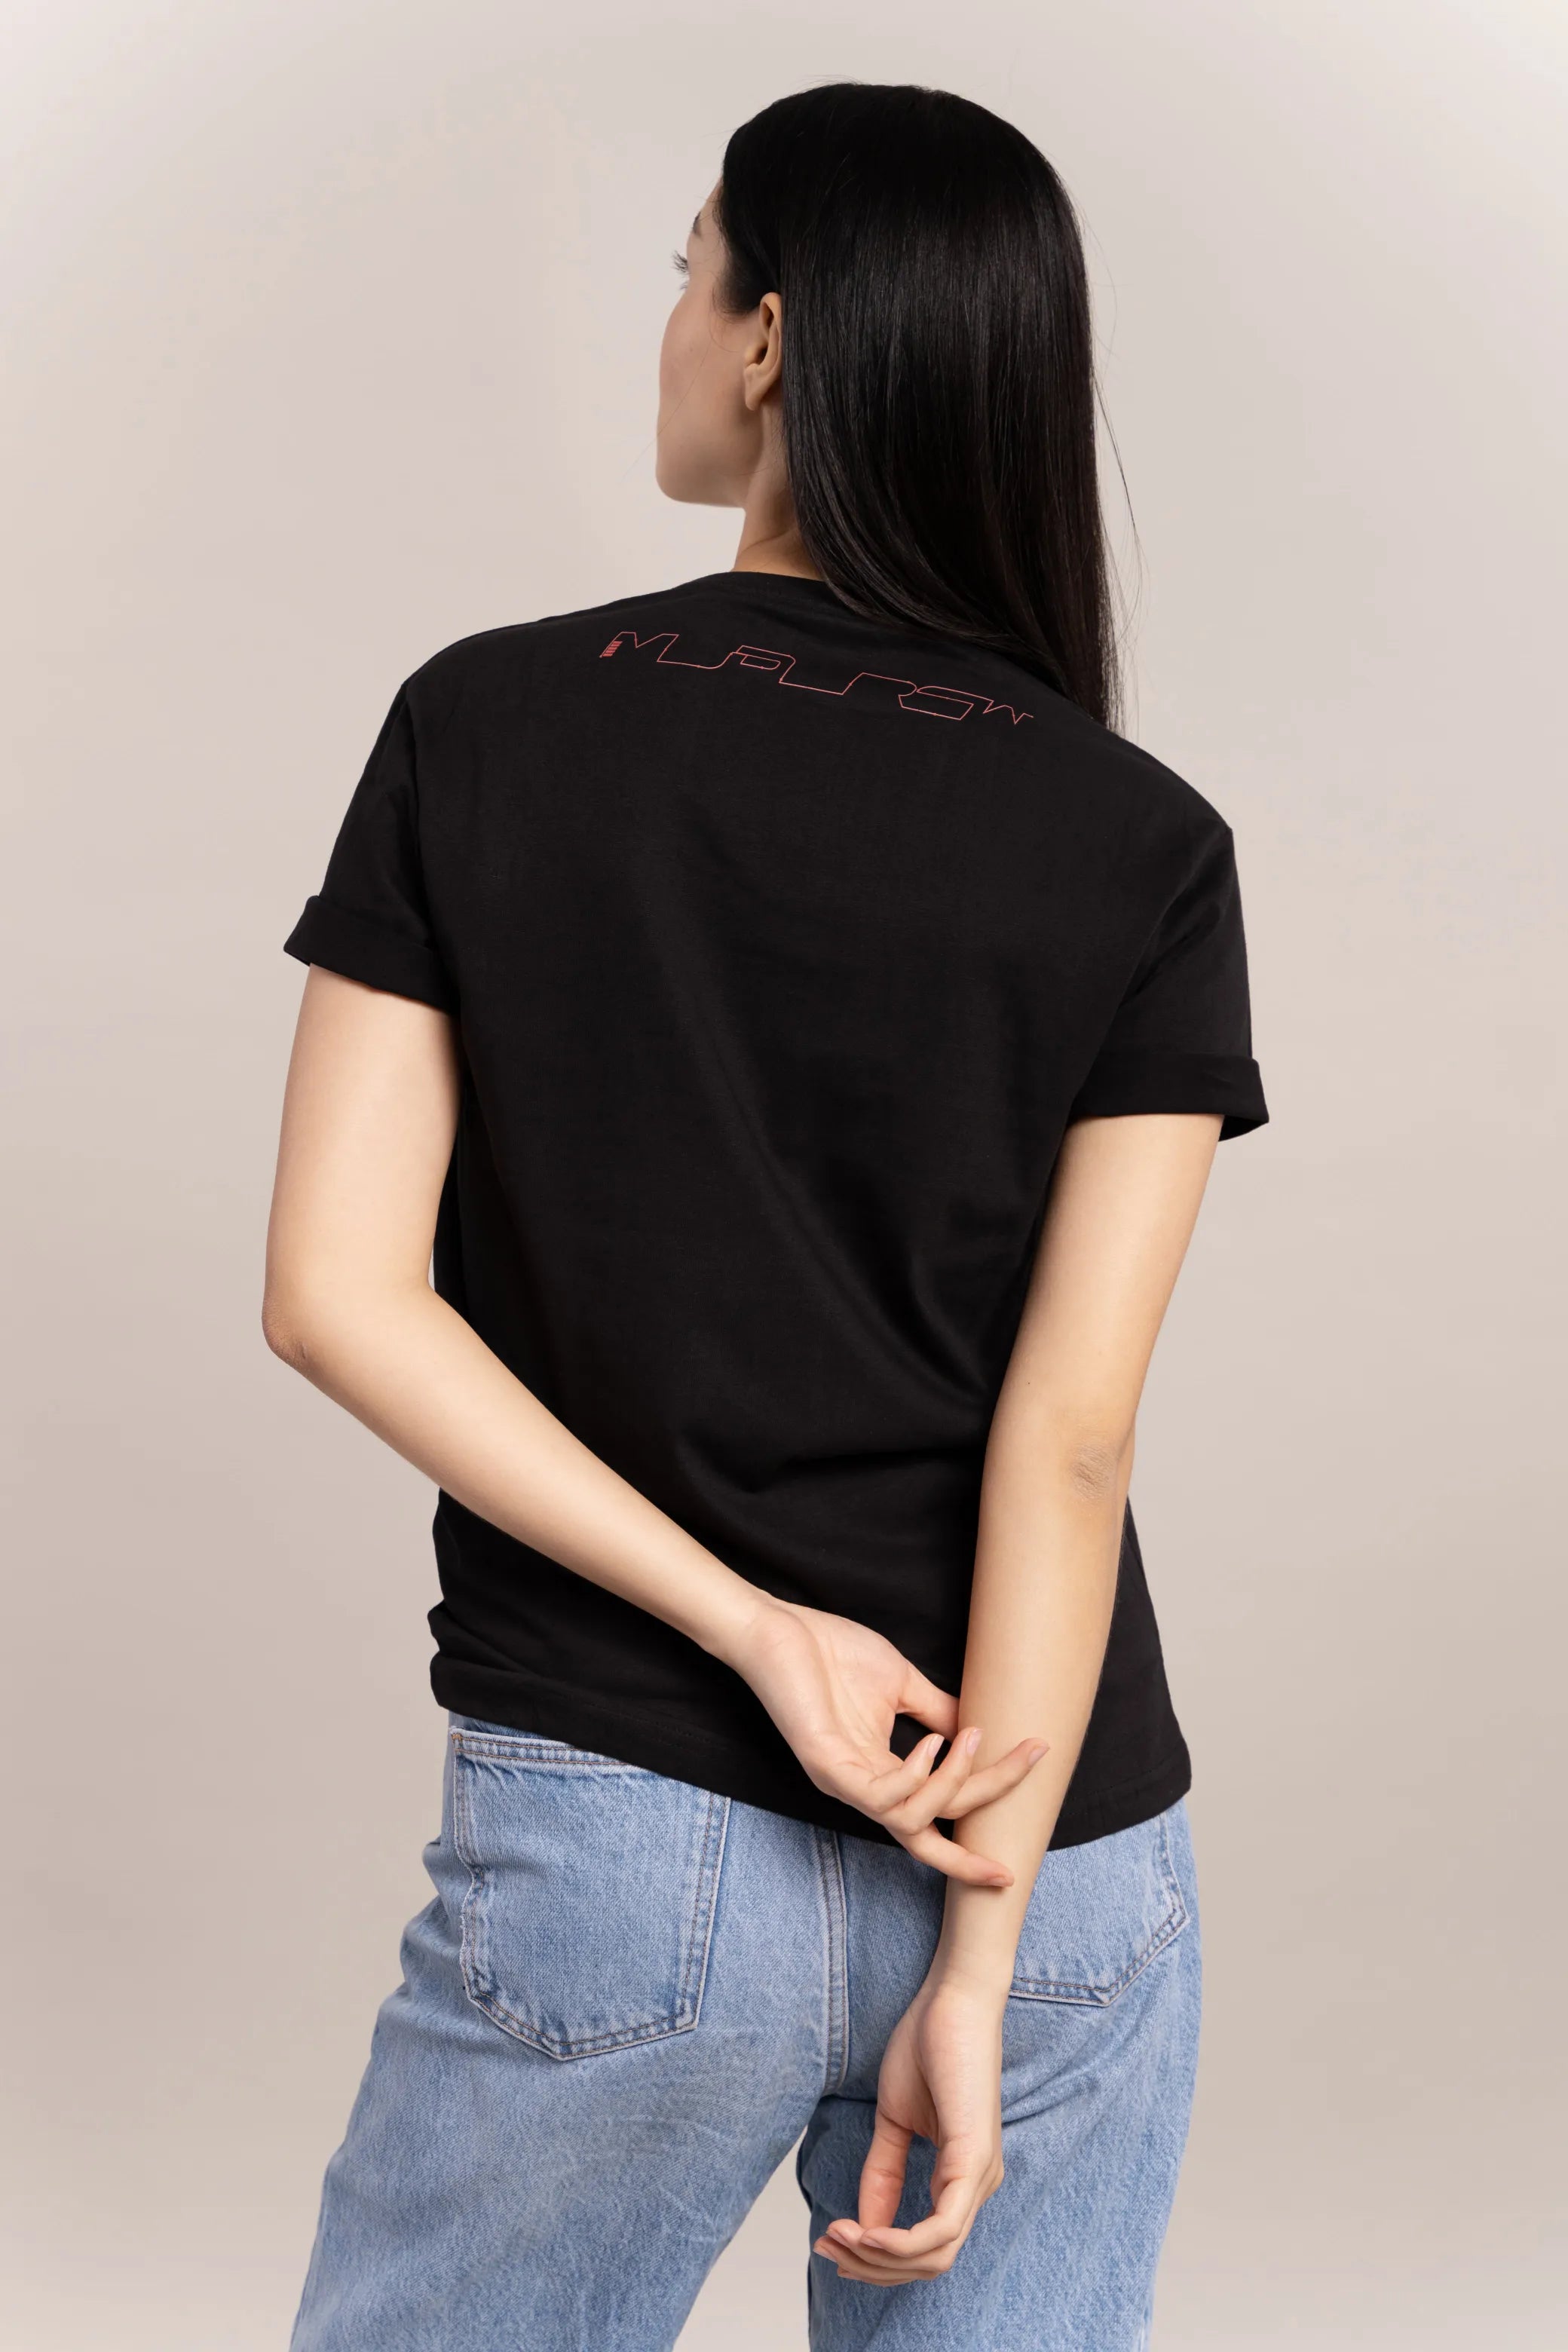 Modcrew black printed T-Shirt